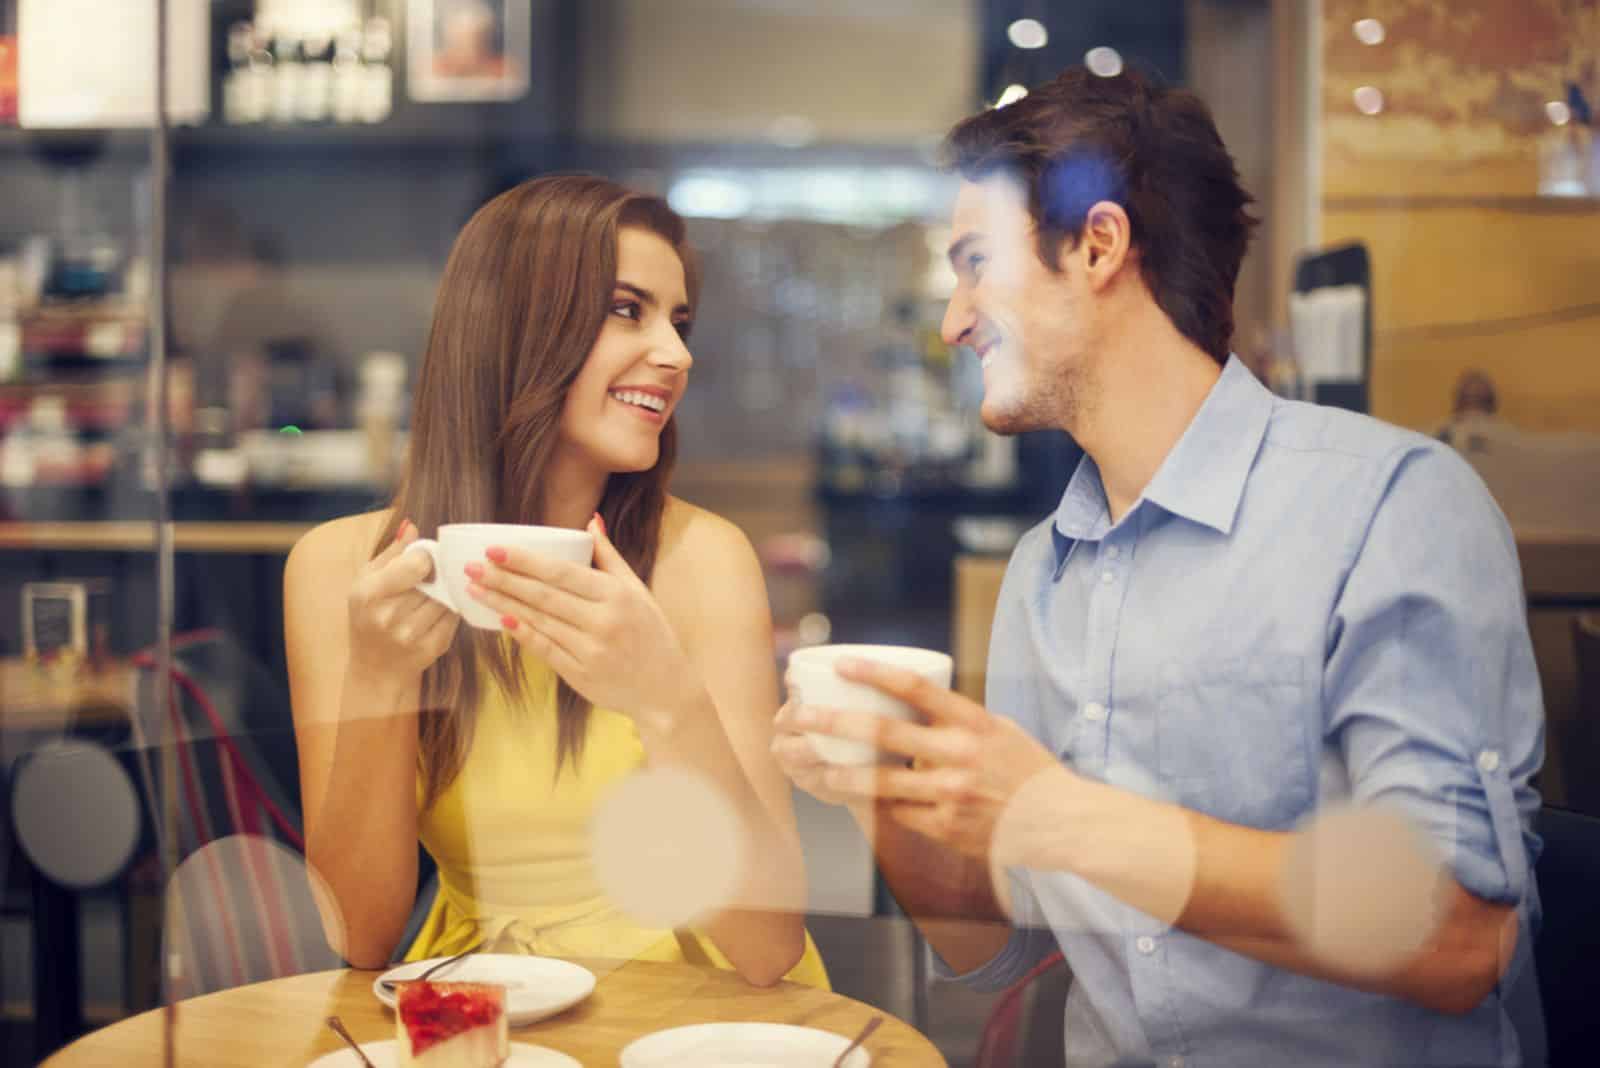 coppia sorridente e innamorata seduta a bere un caffè al bar